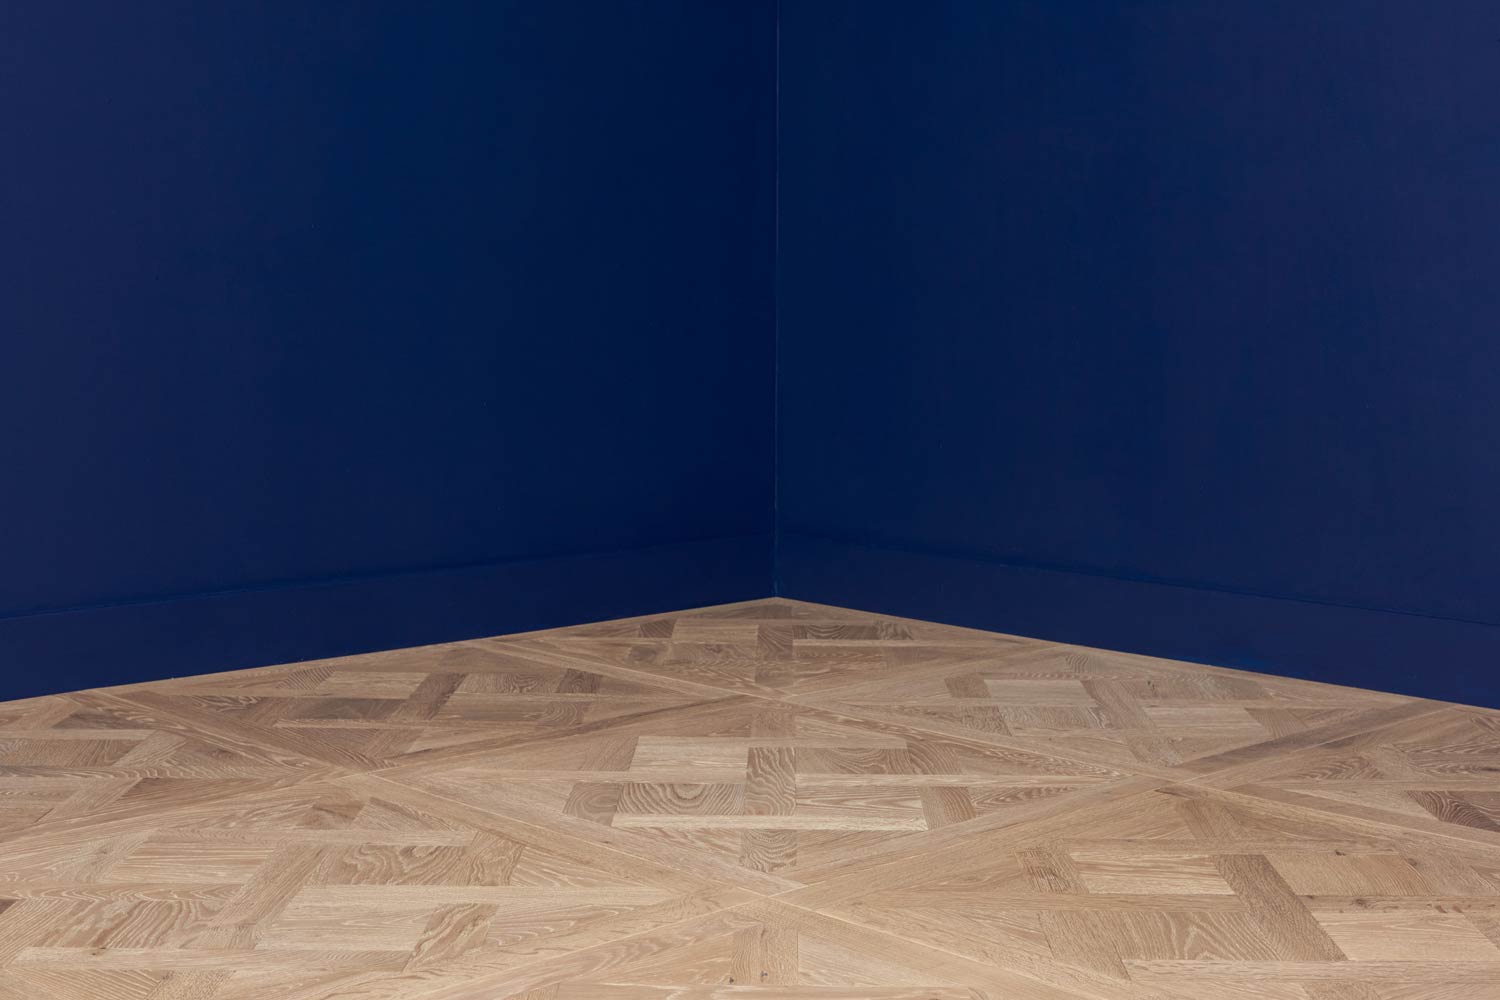 Bergamo 31-1/2″ Wide – White Oak Engineered Hardwood Flooring